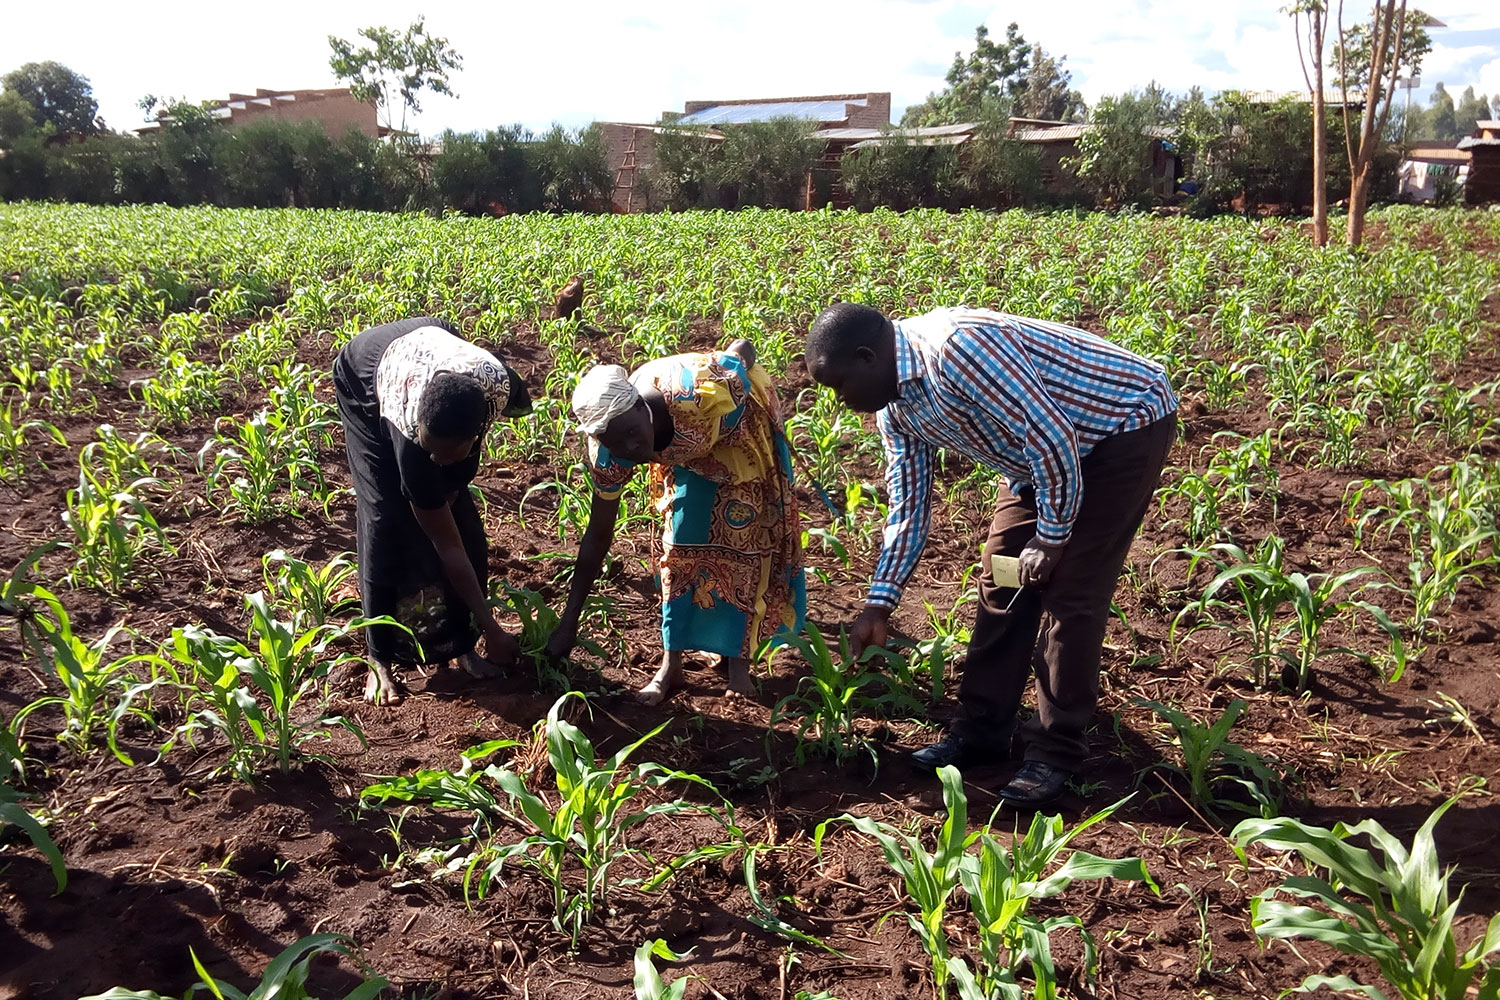 Refugees living in Uganda work on farming activities